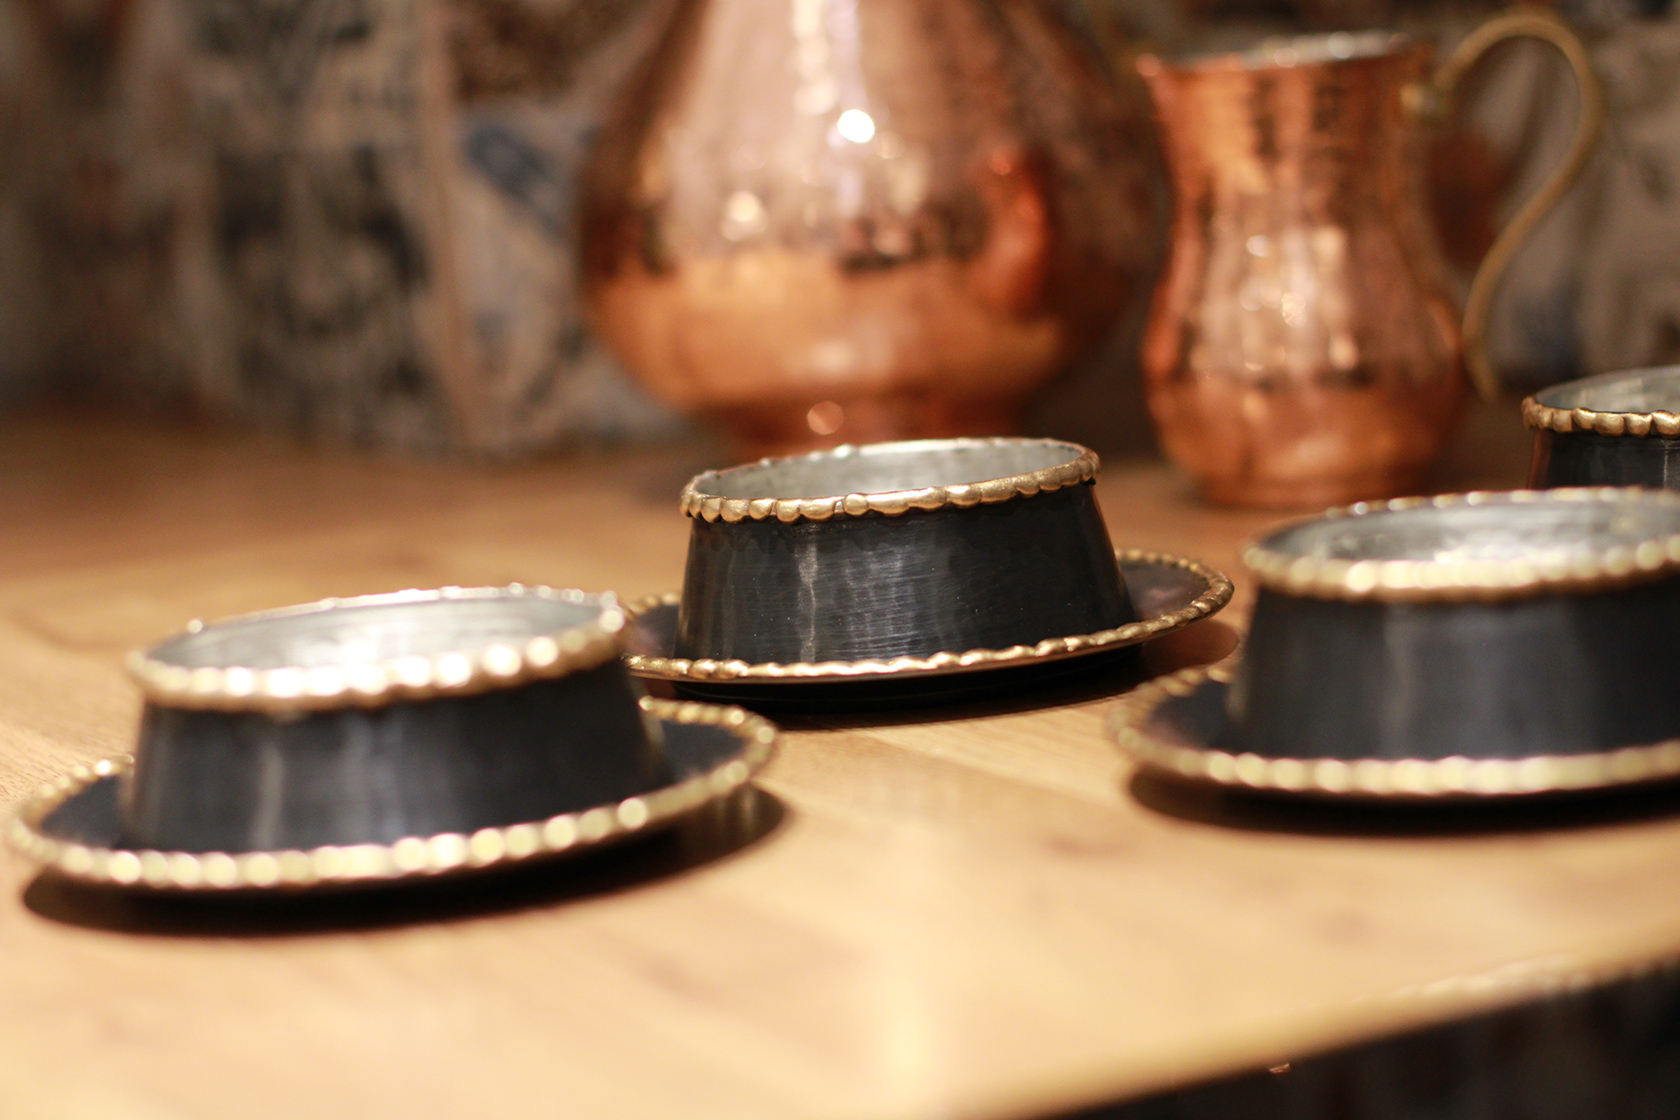 Copper Dessert Bowls, Set of 4